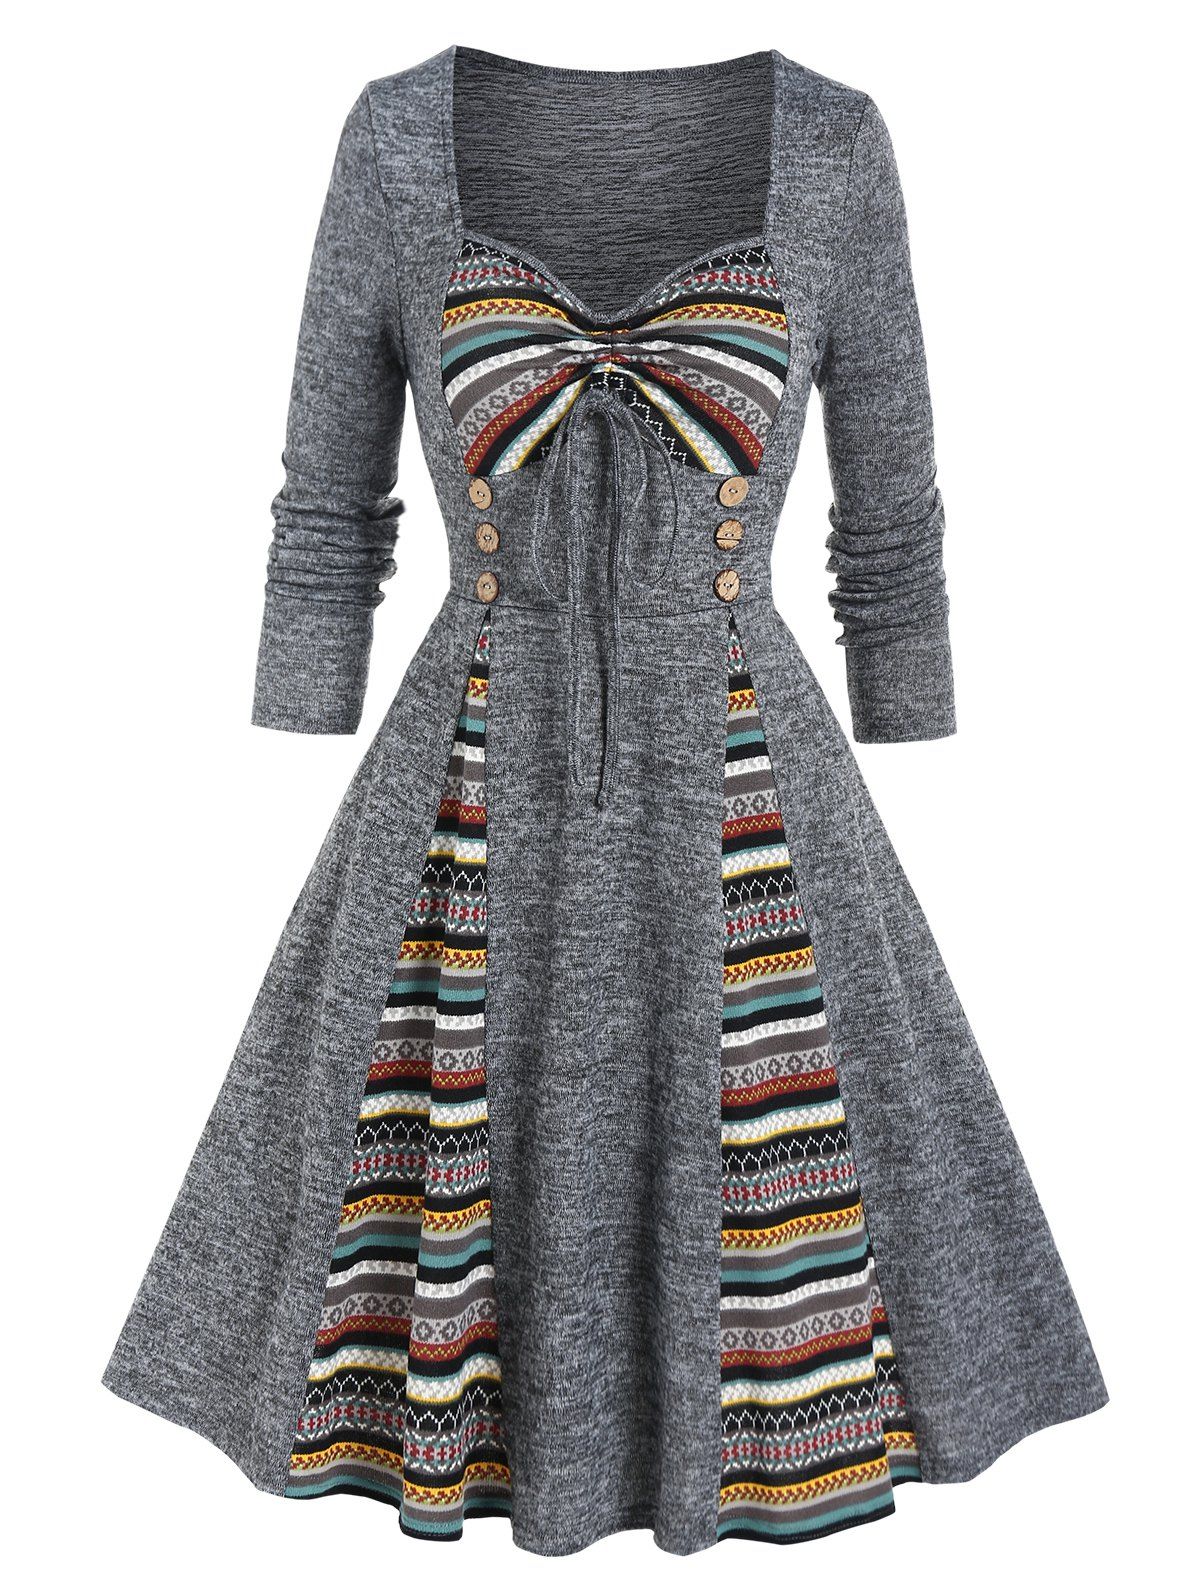 Colored Ethnic Striped Print Panel Dress Godet Bowknot Empire Waist Long Sleeve A Line Midi Dress - GRAY XXL